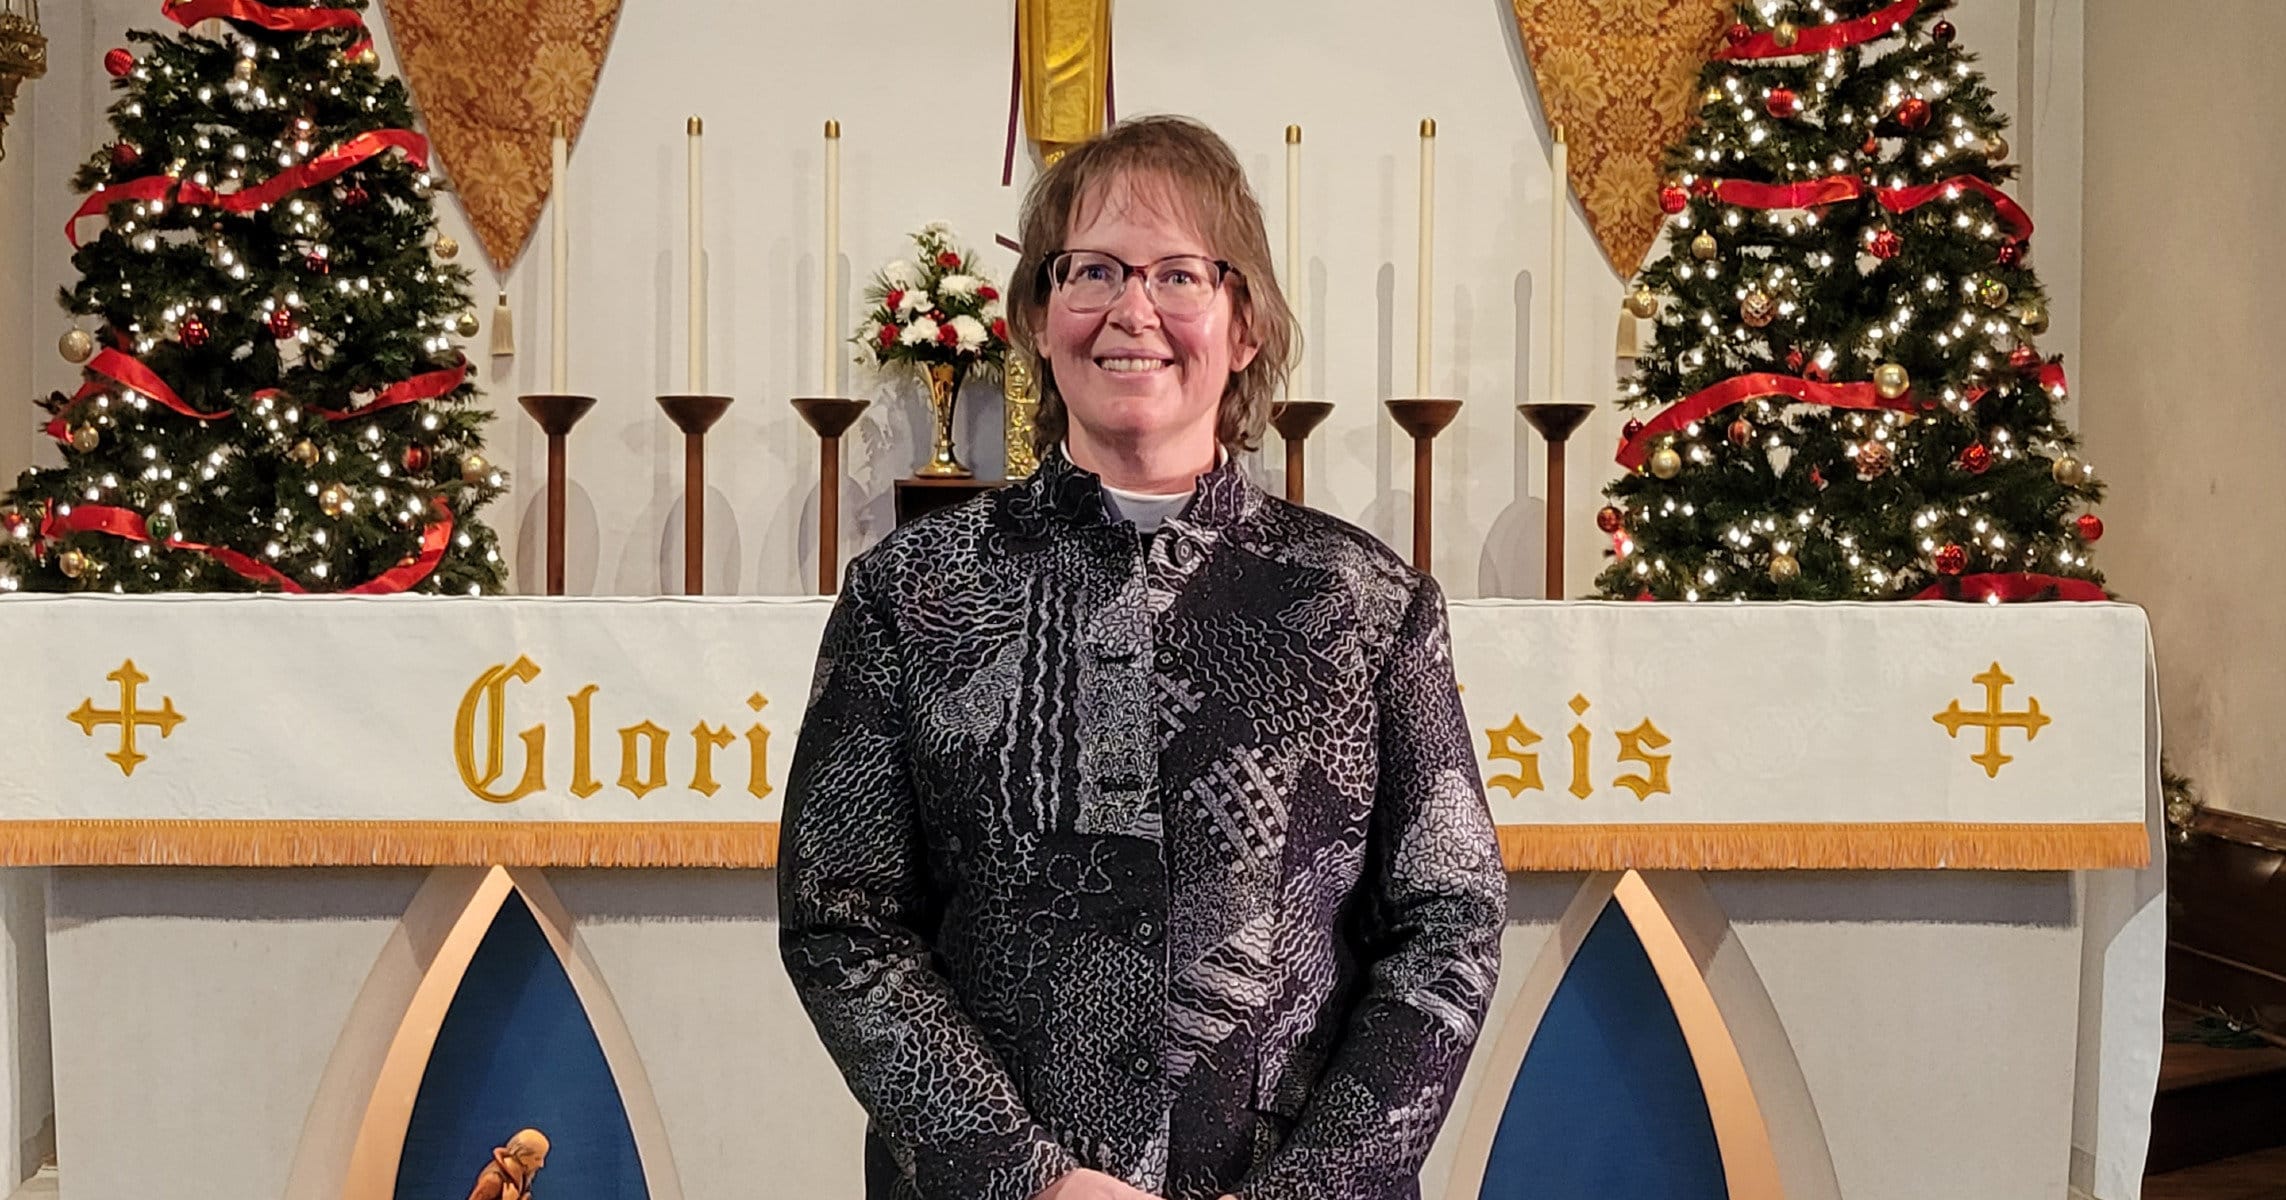 1991 AHS graduate Heather Barta now serves as an Episcopal priest.